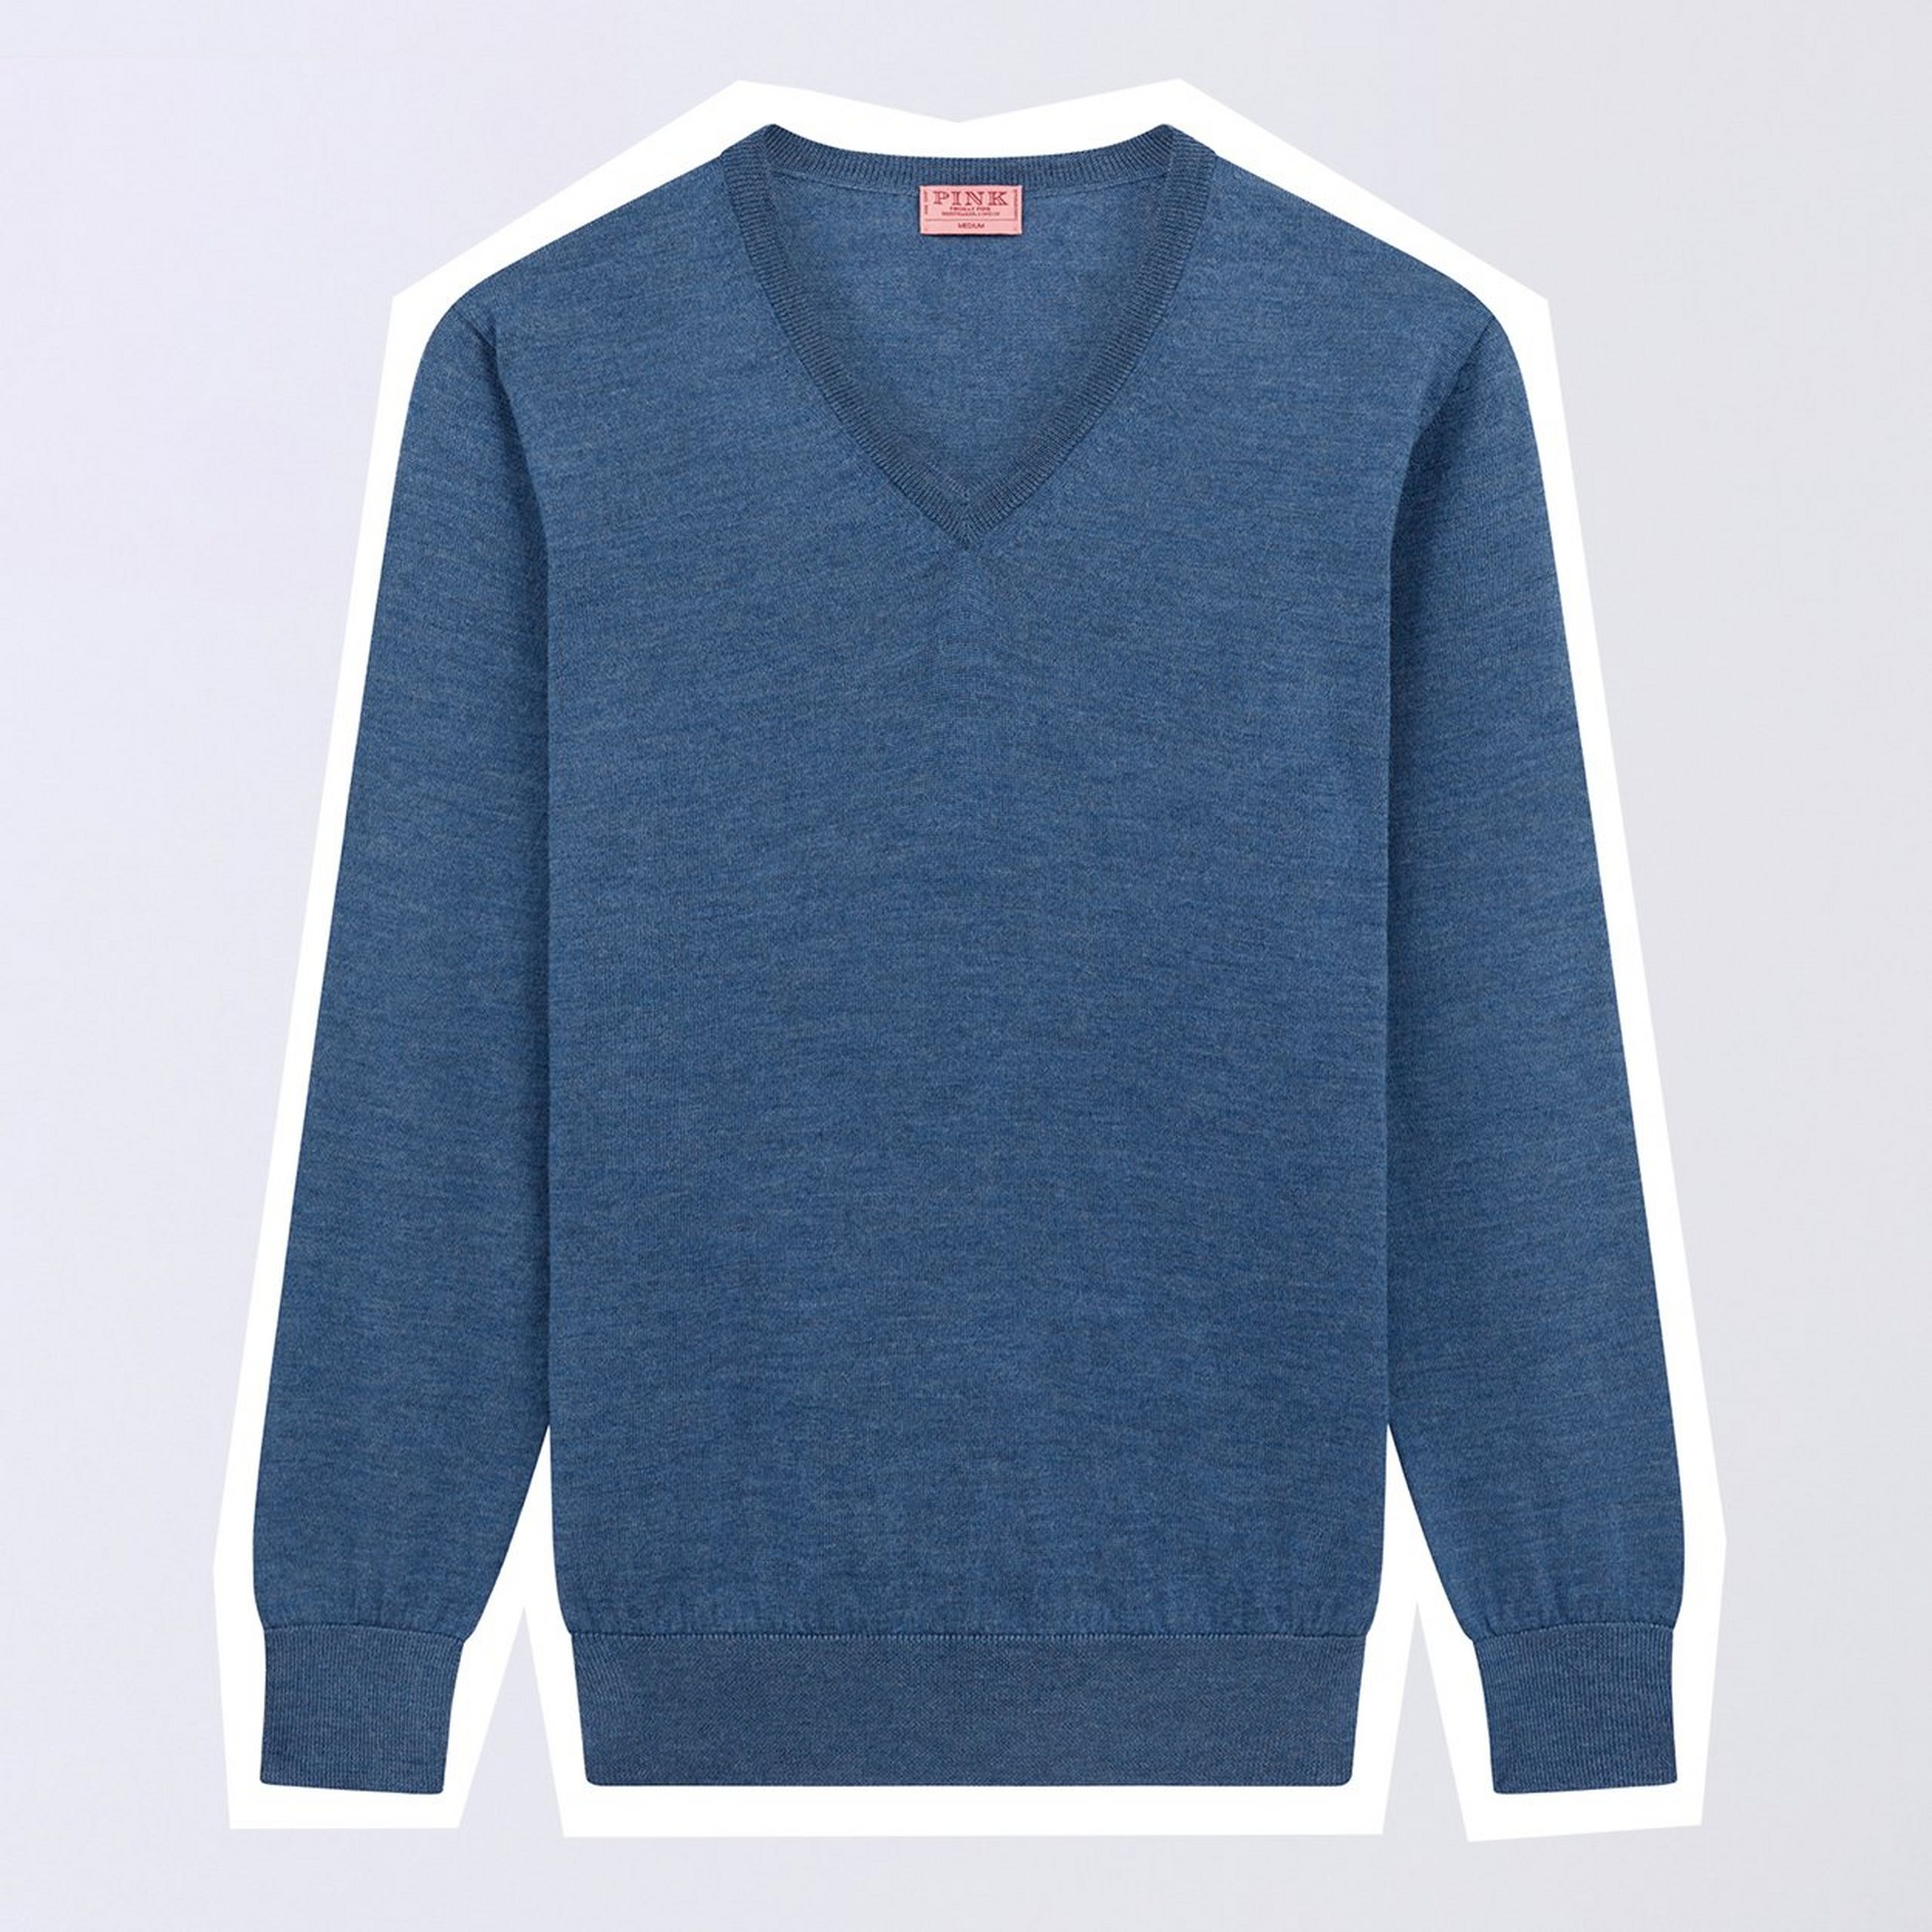 Airforce Blue Merino Wool V-Neck Sweater, £150